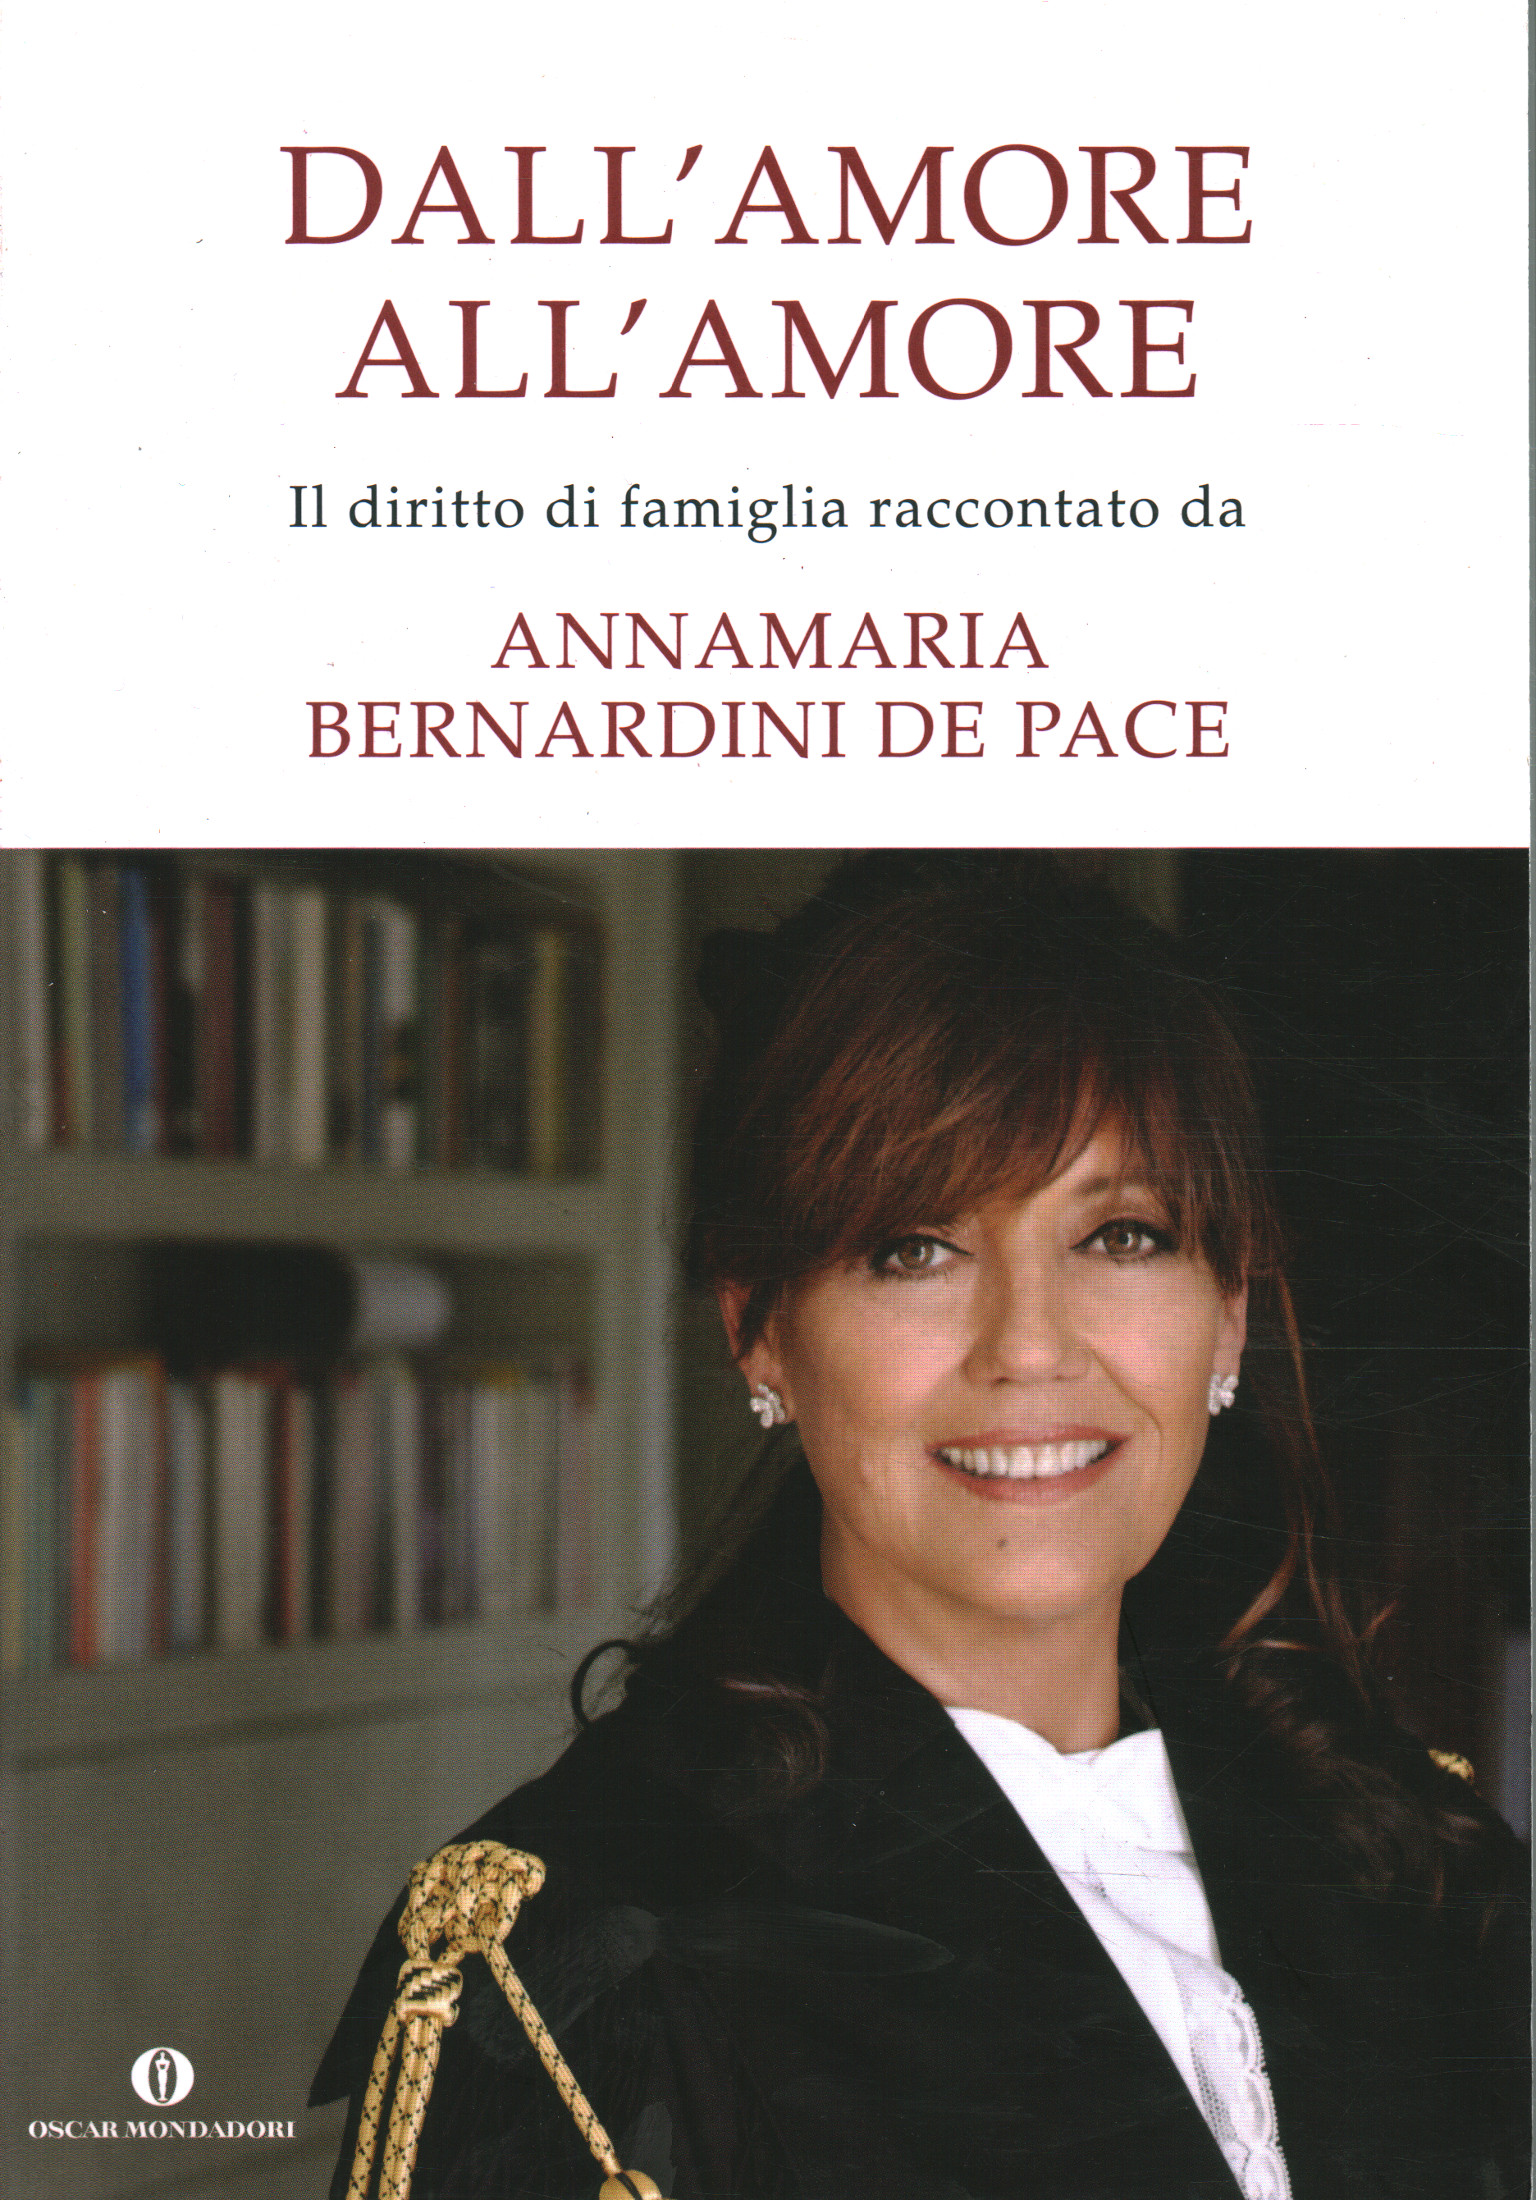 From love to love, Annamaria Bernardini De Pace